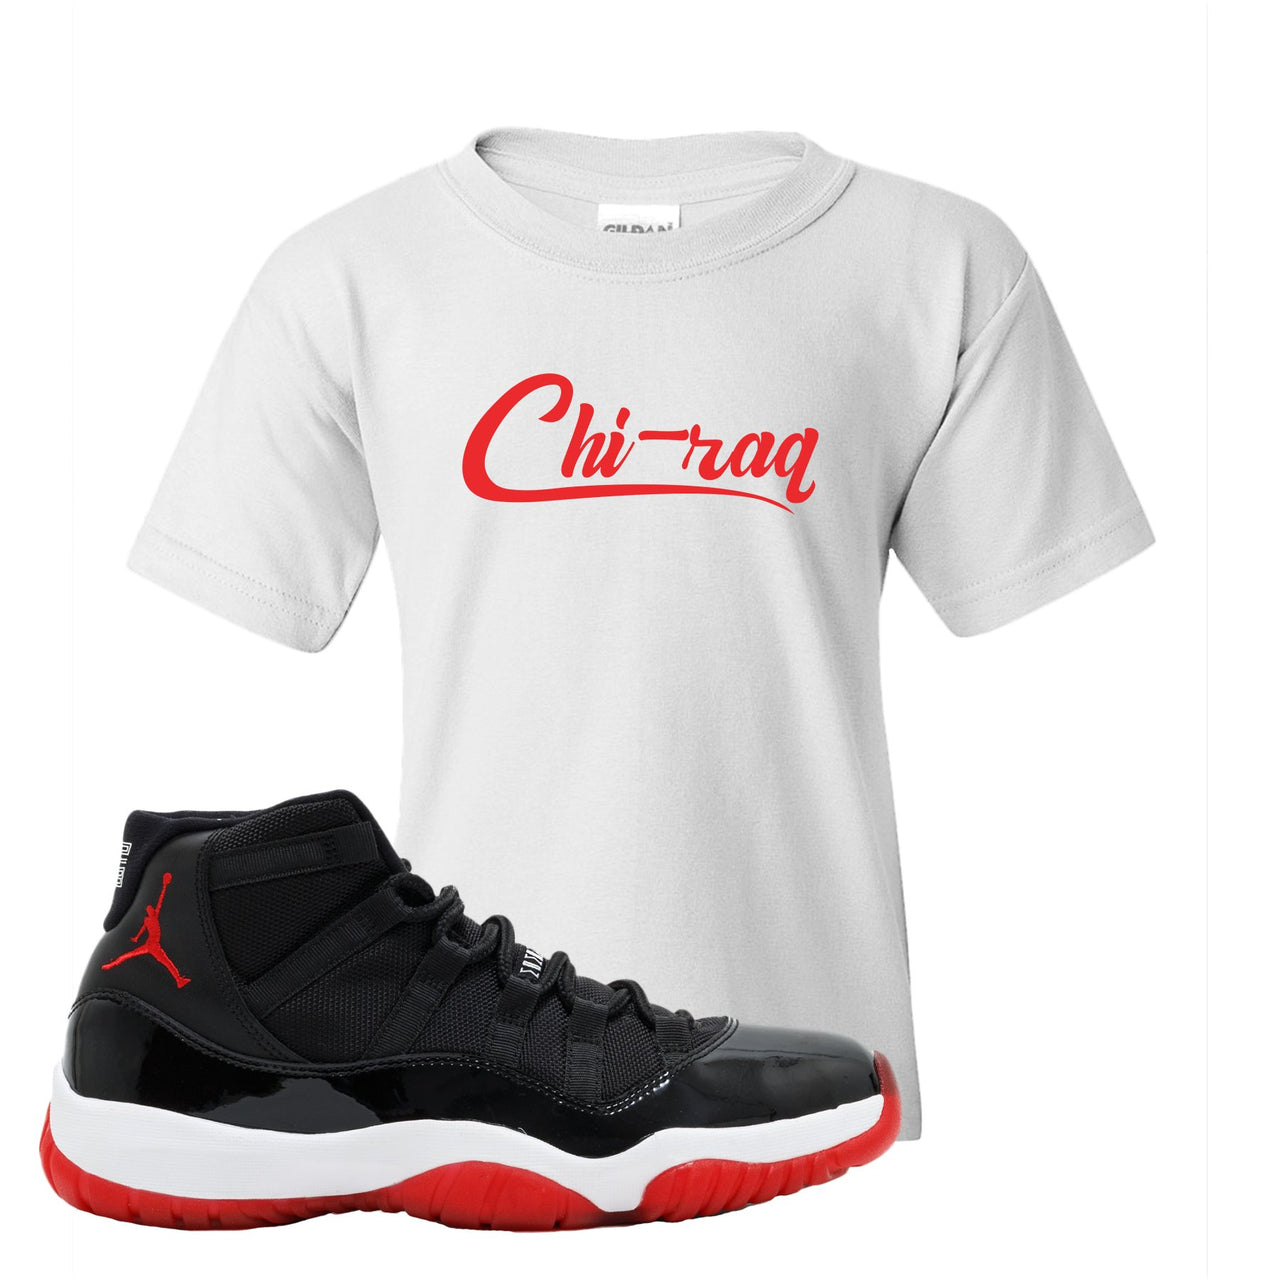 Jordan 11 Bred Chi-raq White Sneaker Hook Up Kid's T-Shirt